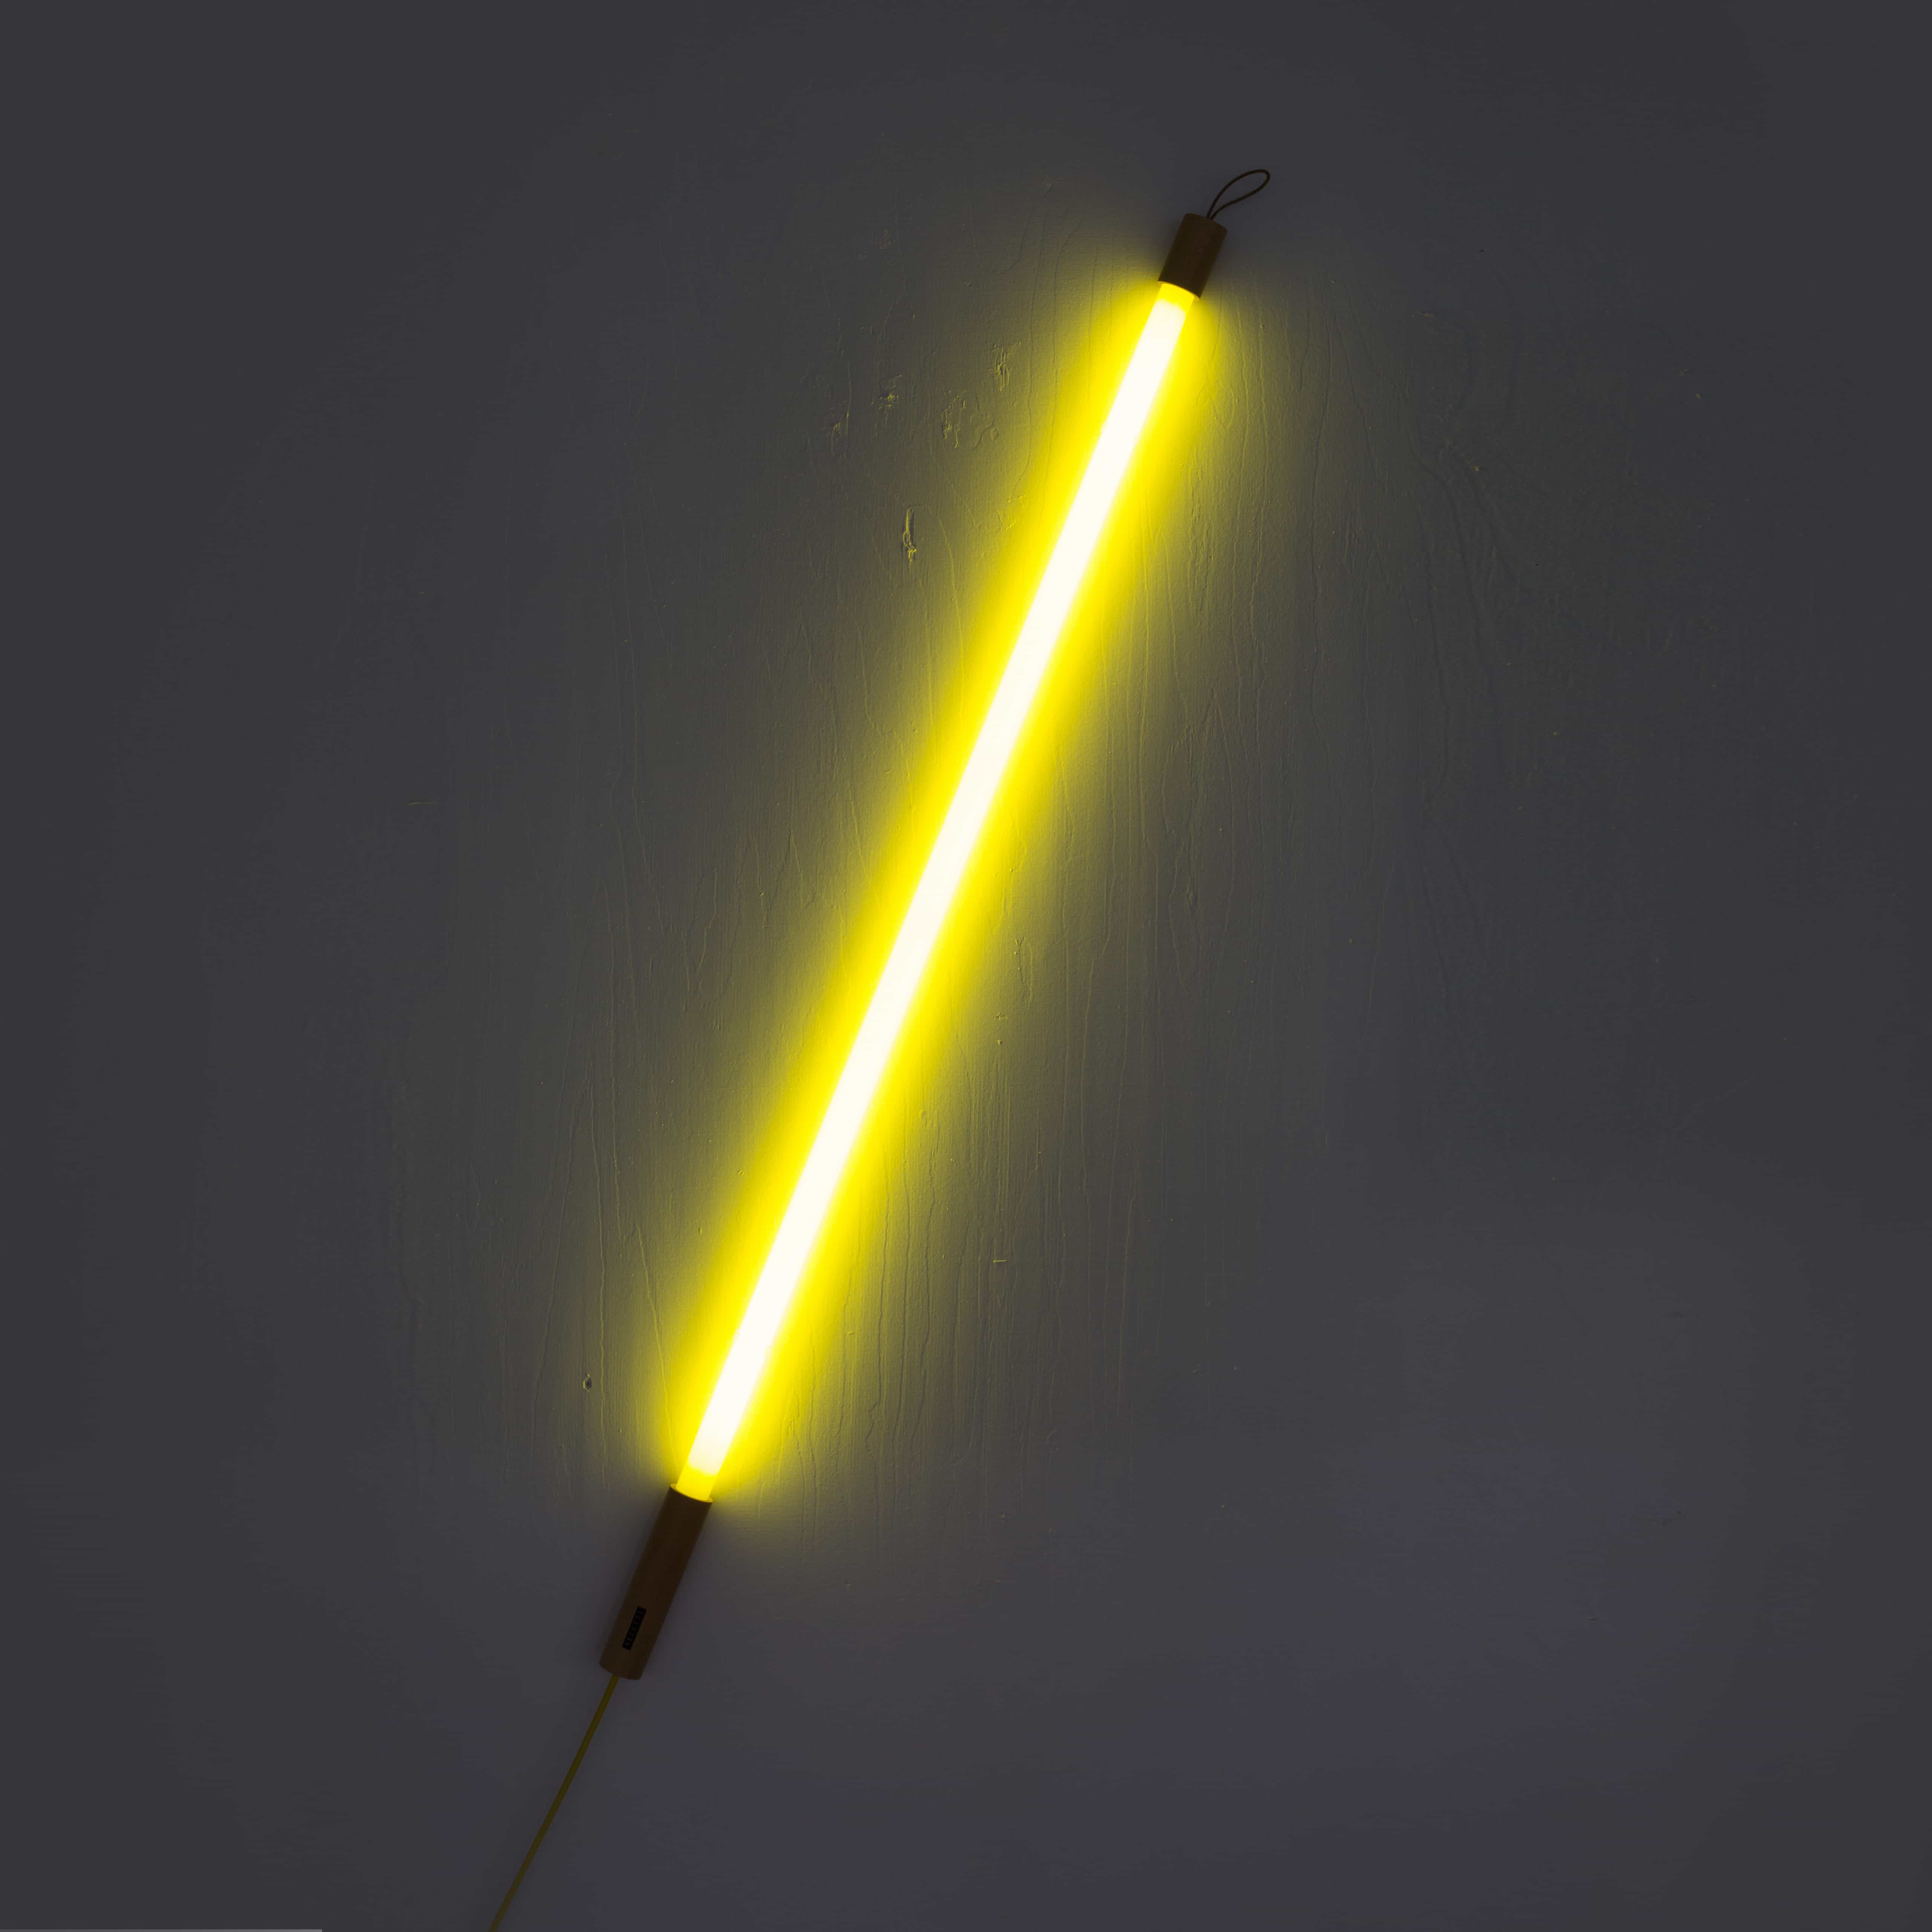 Linea led lamp - Yellow